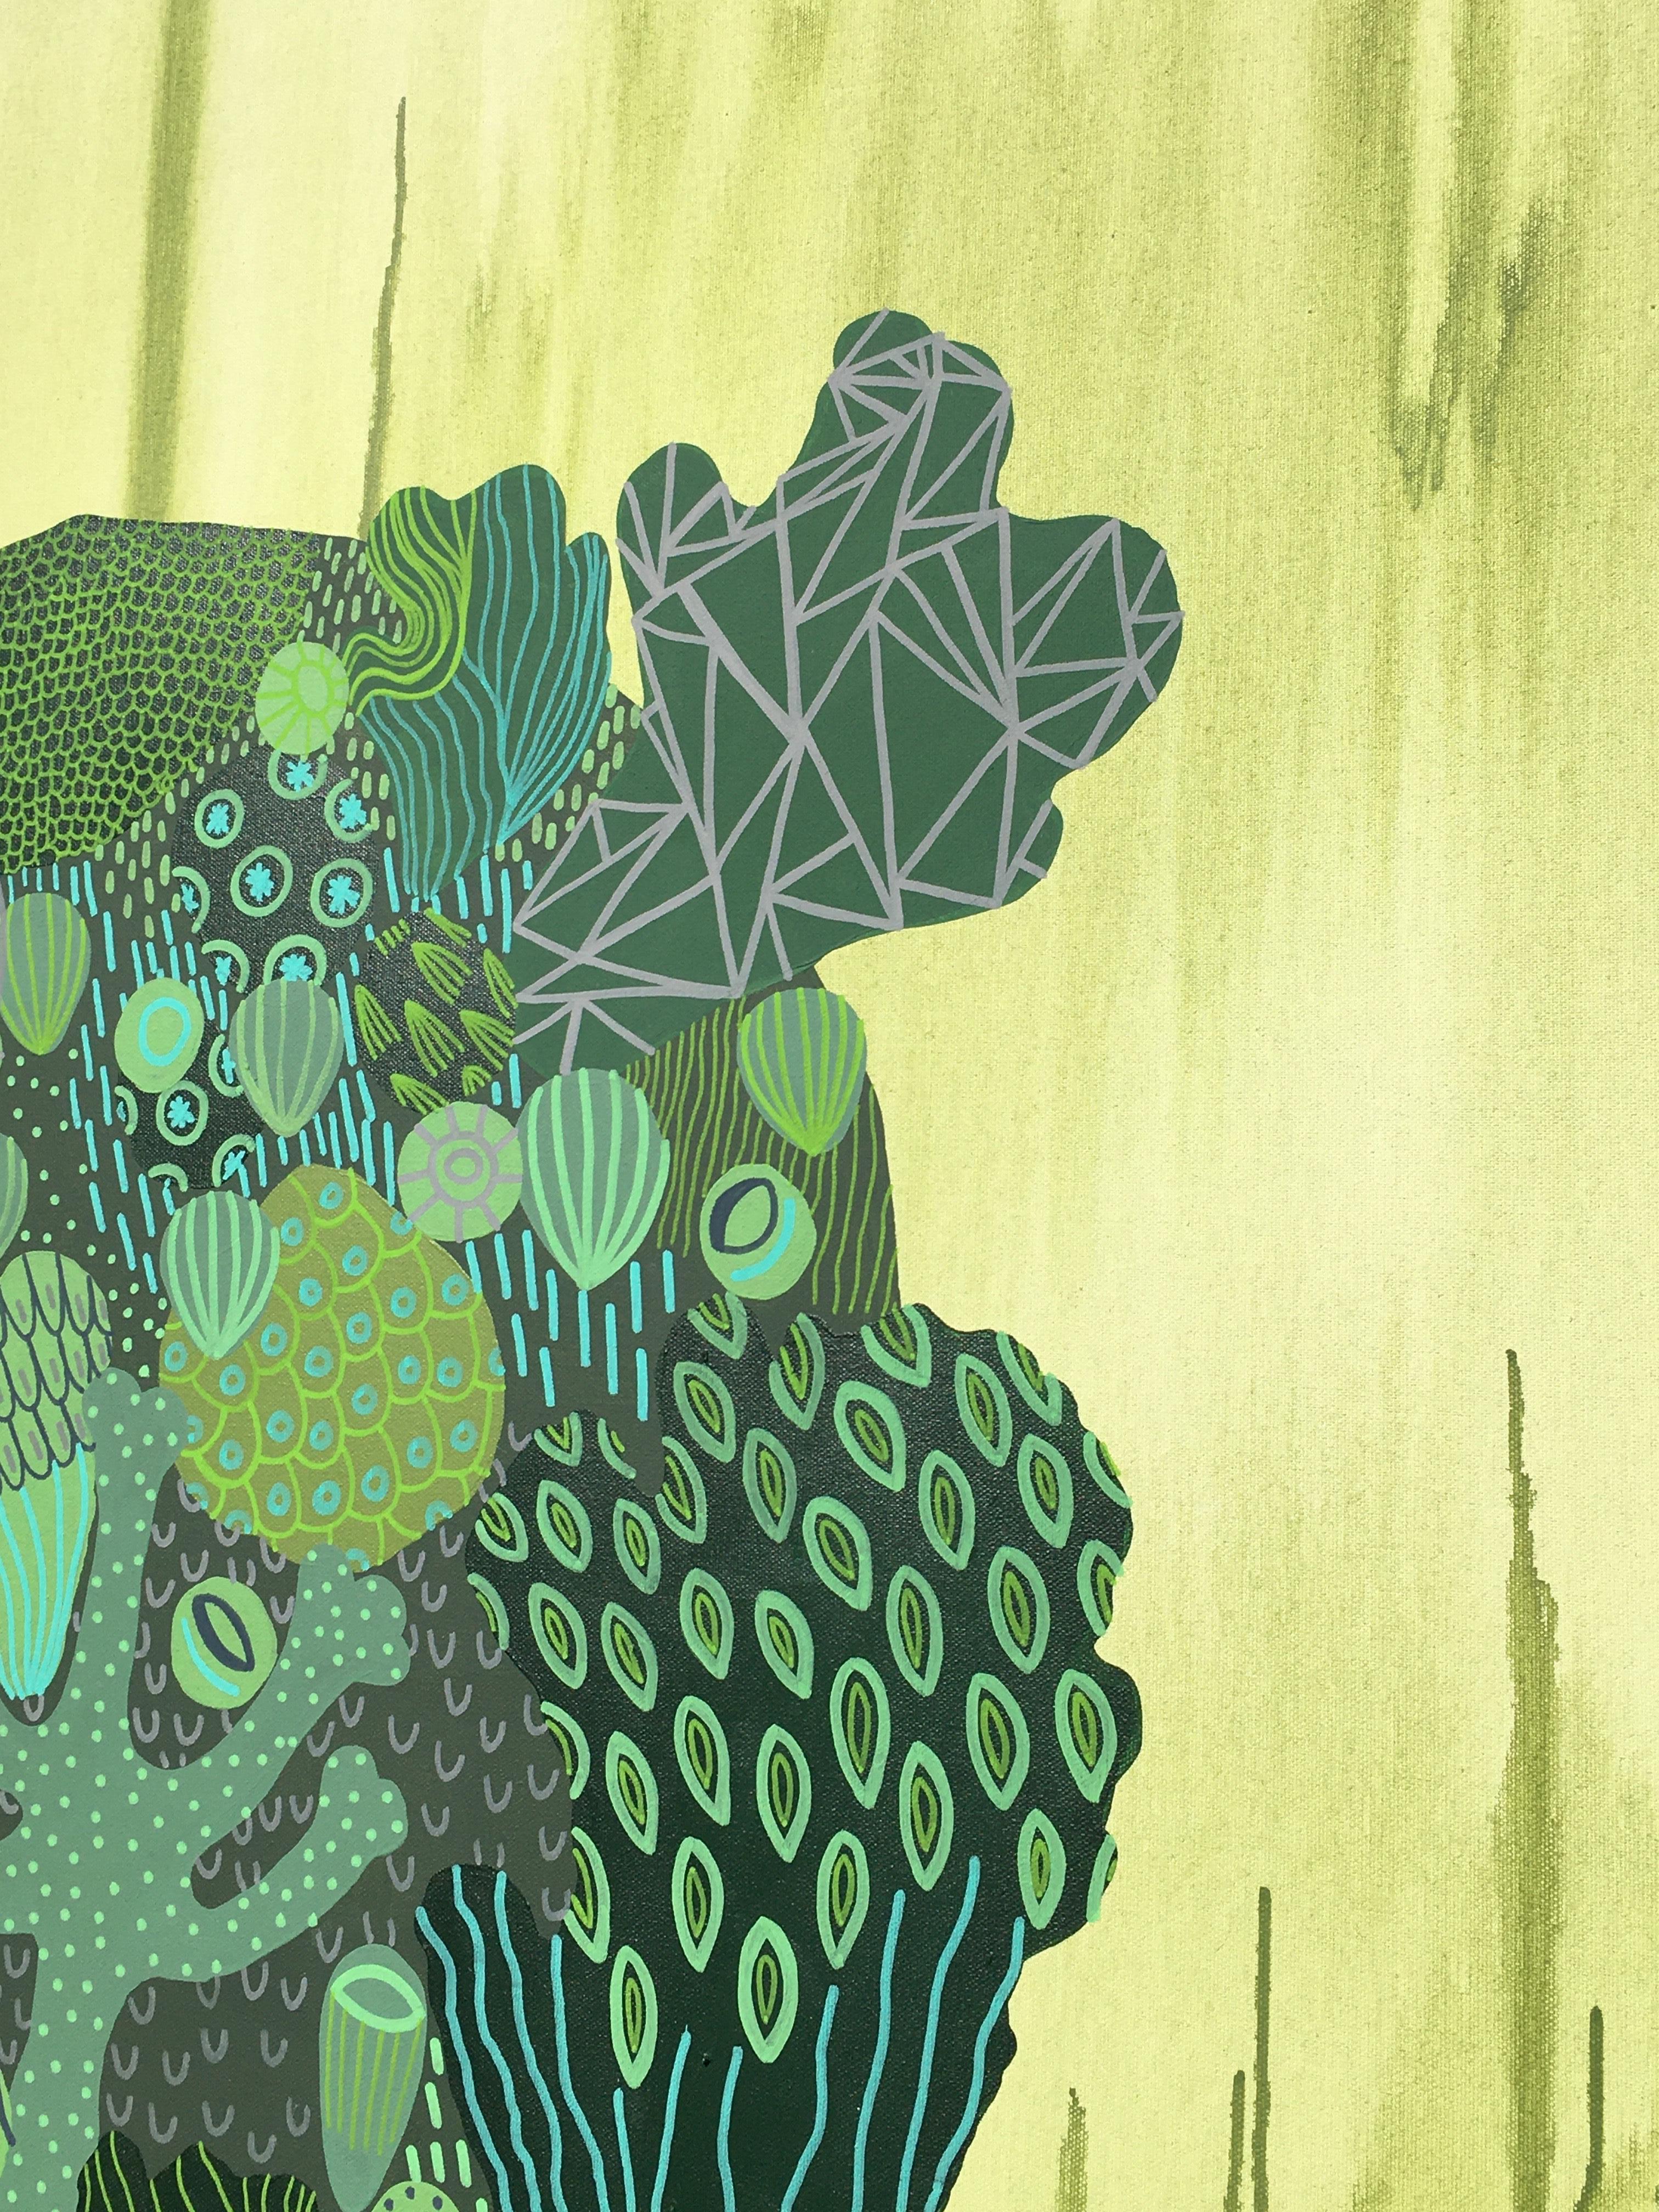 THALASSO 6 - Abstraktes figuratives grünes Gemälde auf Leinwand, Biomorph, Meeres biomorph  (Grün), Abstract Painting, von Chloe York